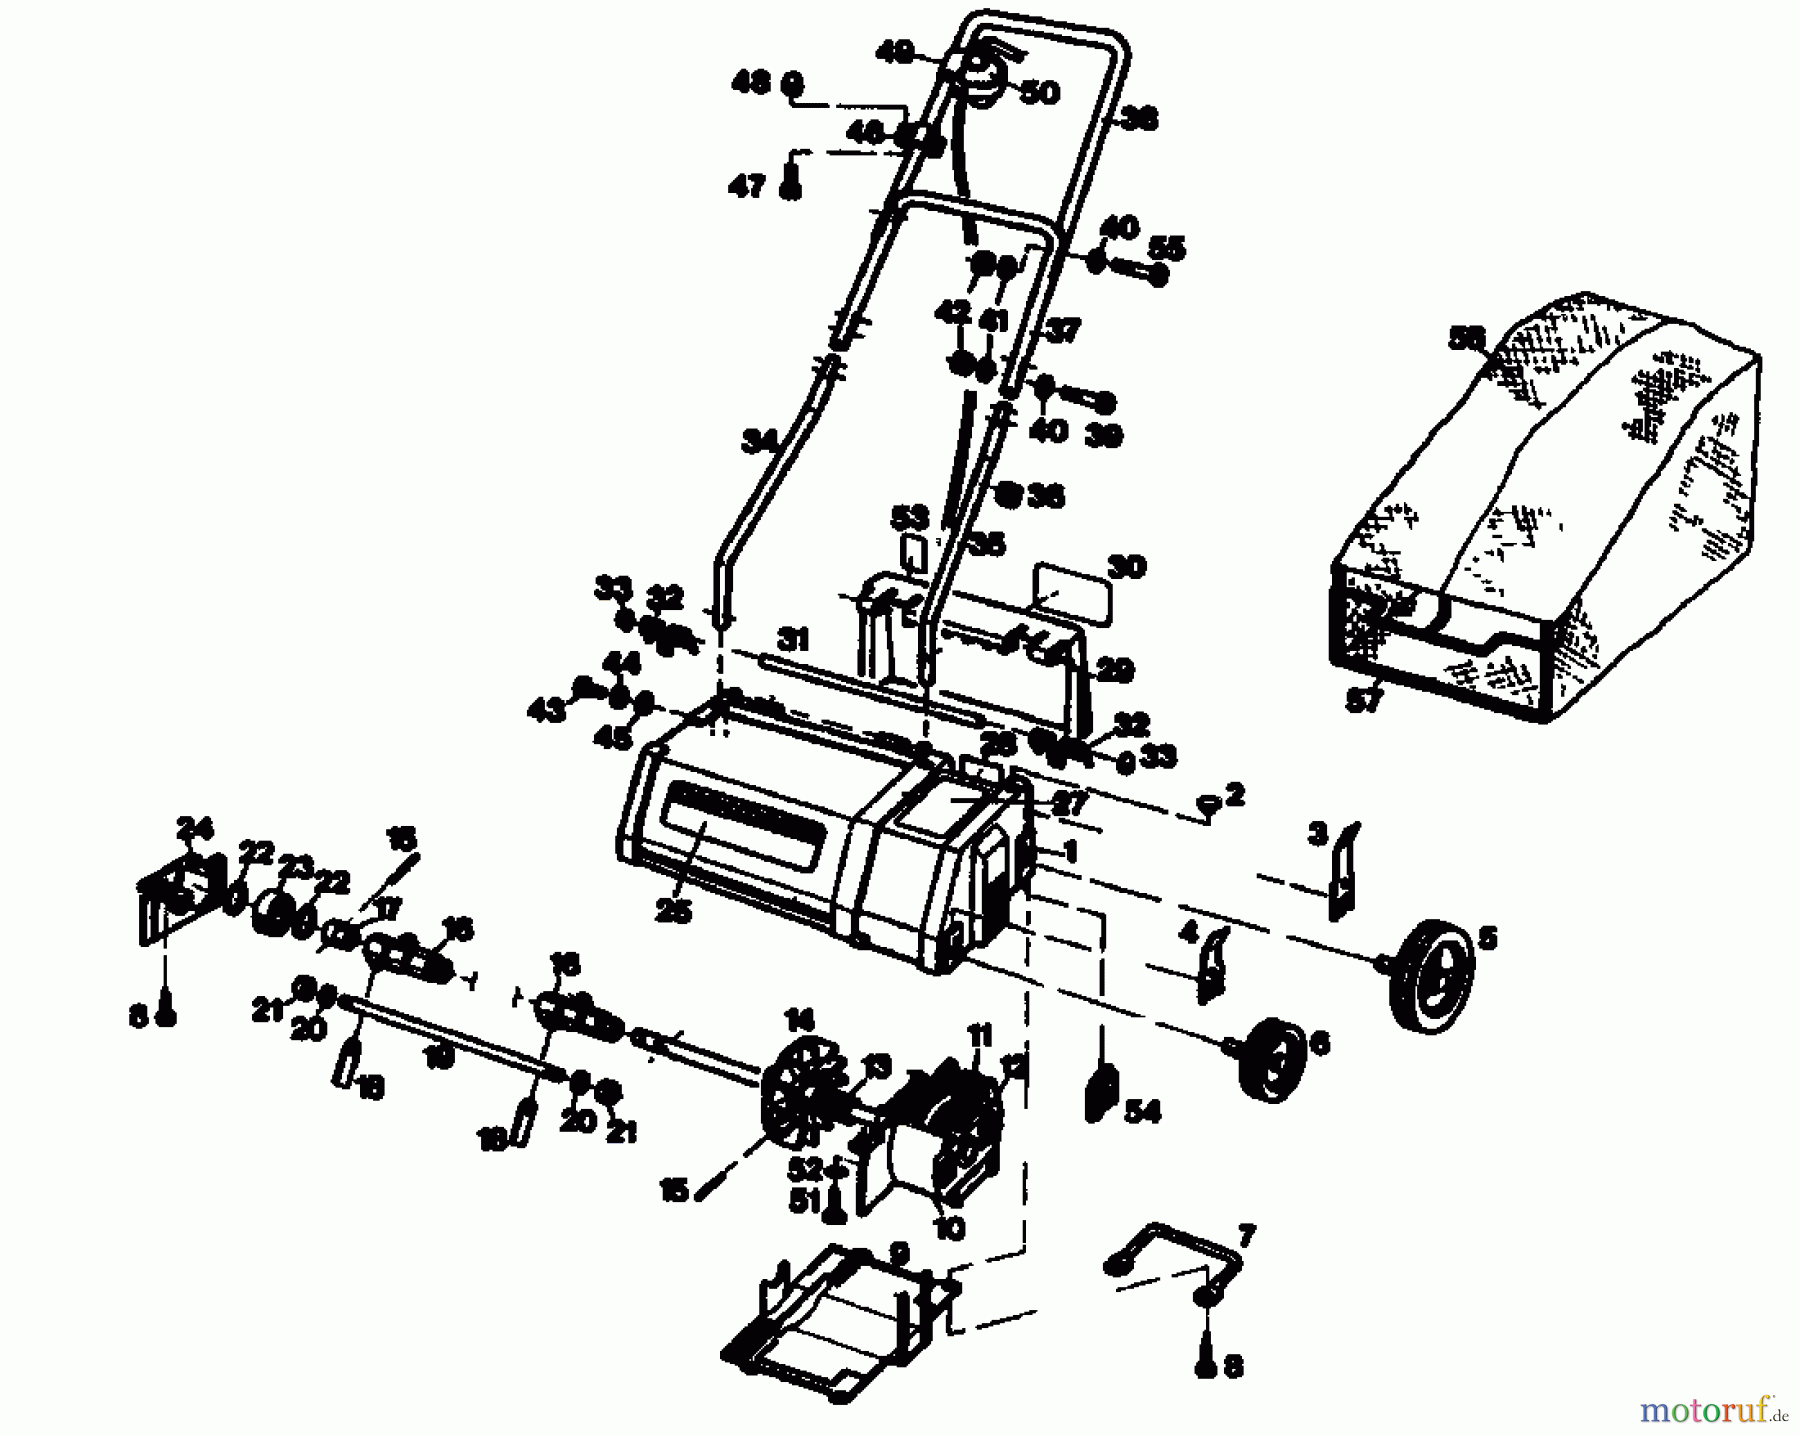  Gutbrod Electric verticutter VE 32 02890.02  (1986) Basic machine